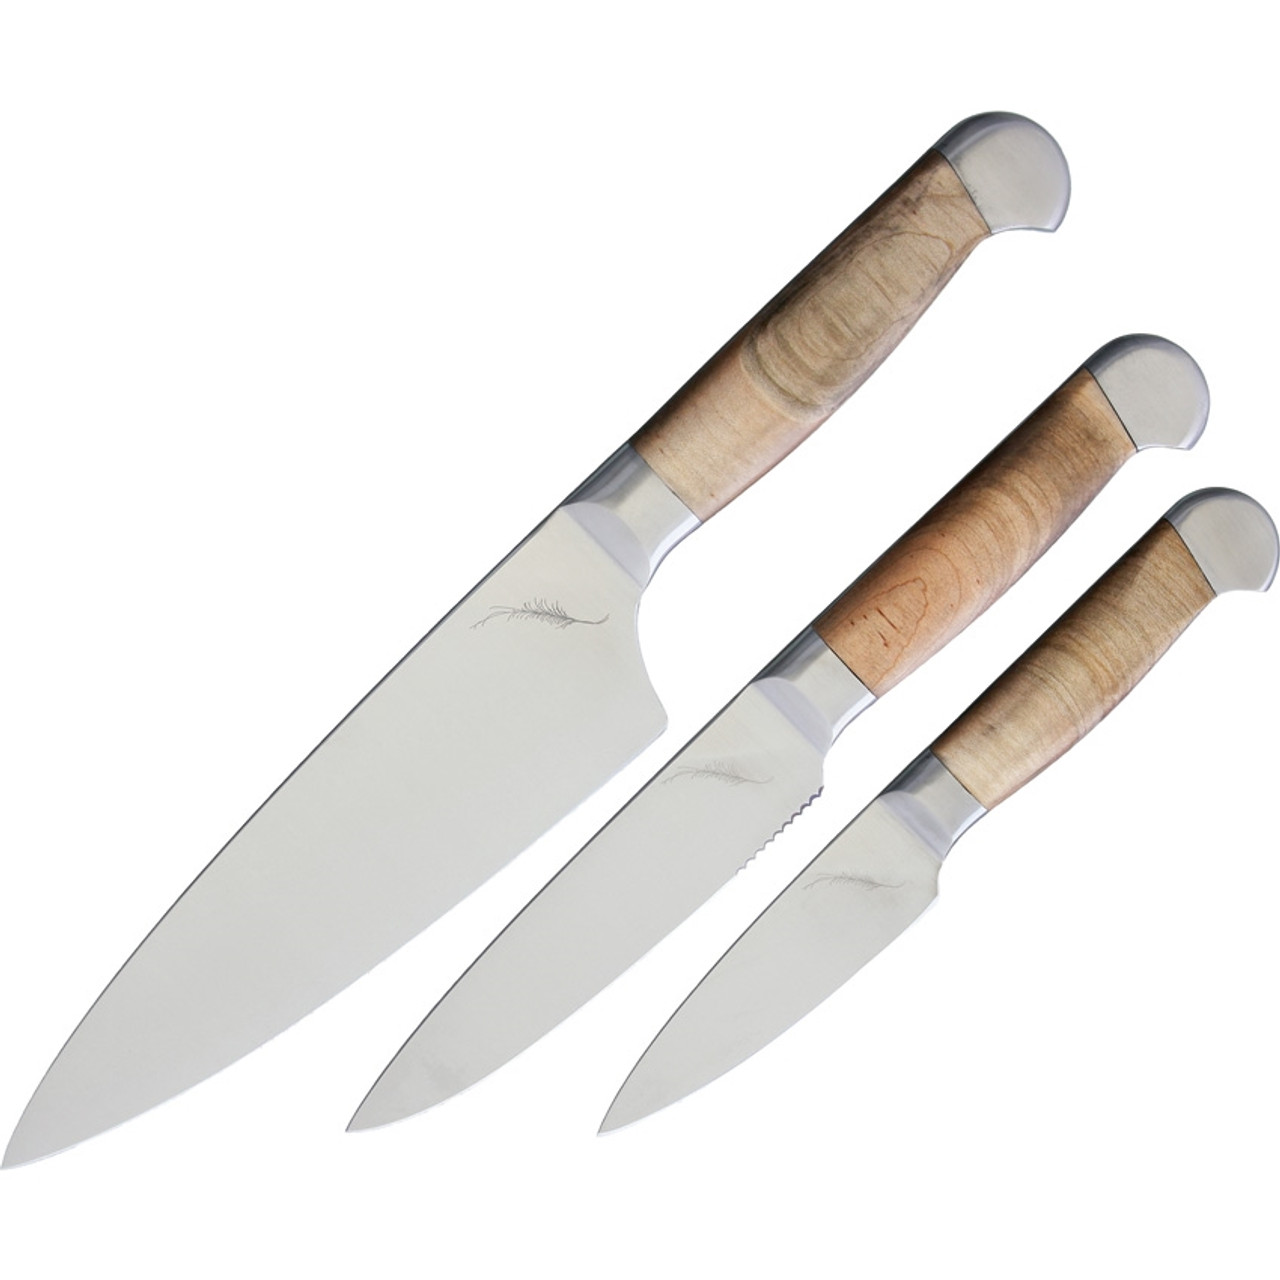 Ferrum Estate 3pc Kitchen Set, American Steel Full Tang Blades, Maple Wood Handles